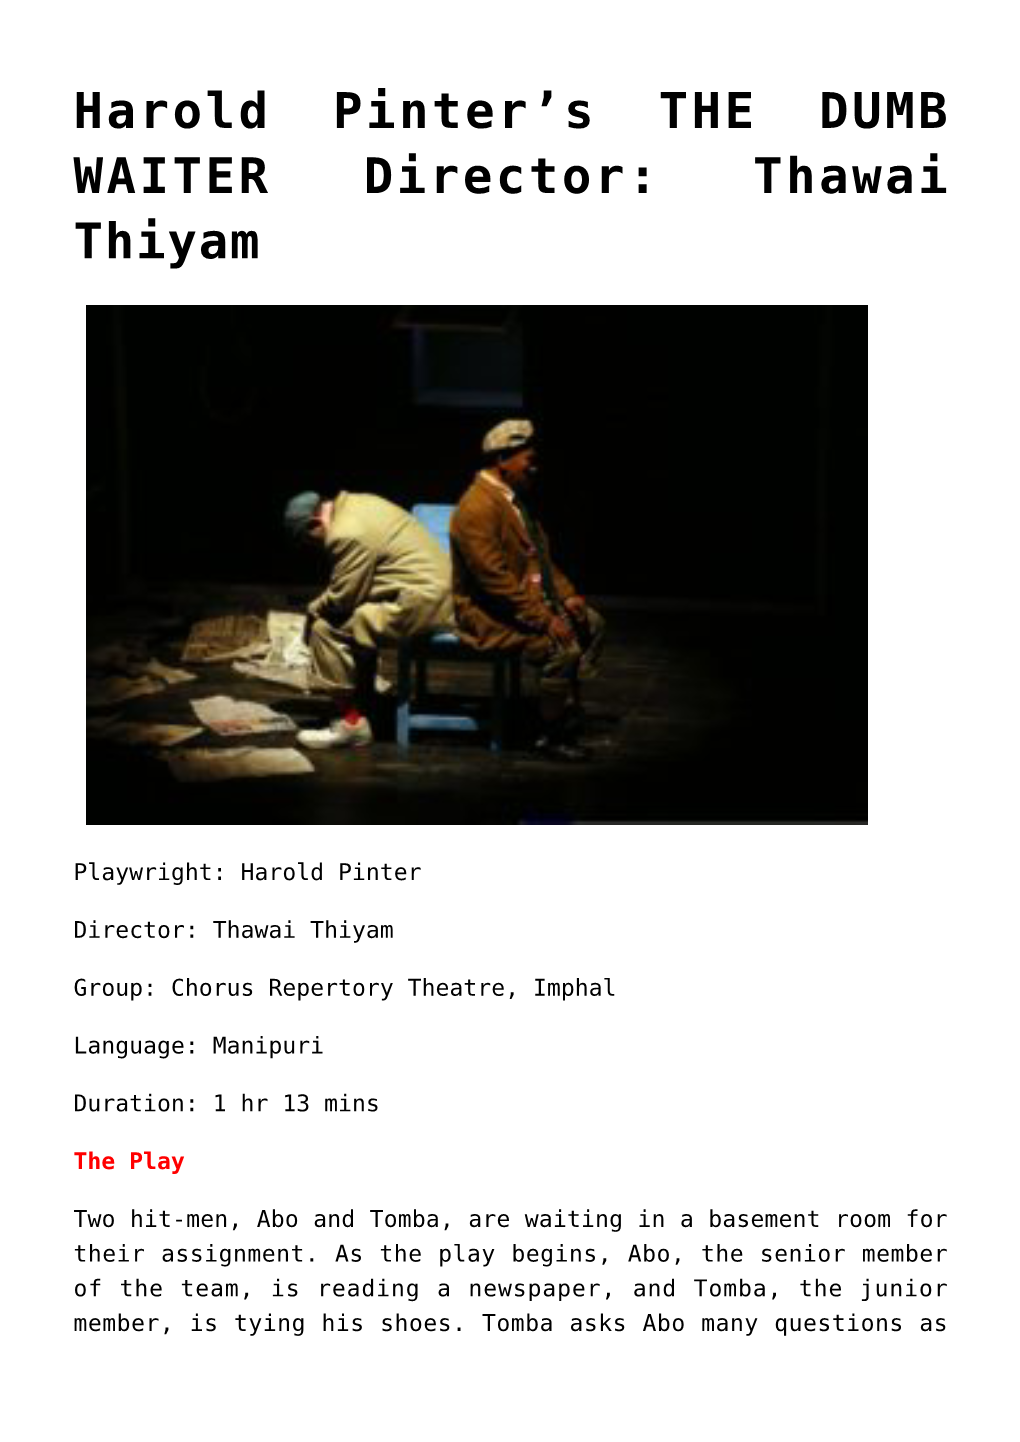 Thawai Thiyam,Chorus Repertory Theatre, Imphal